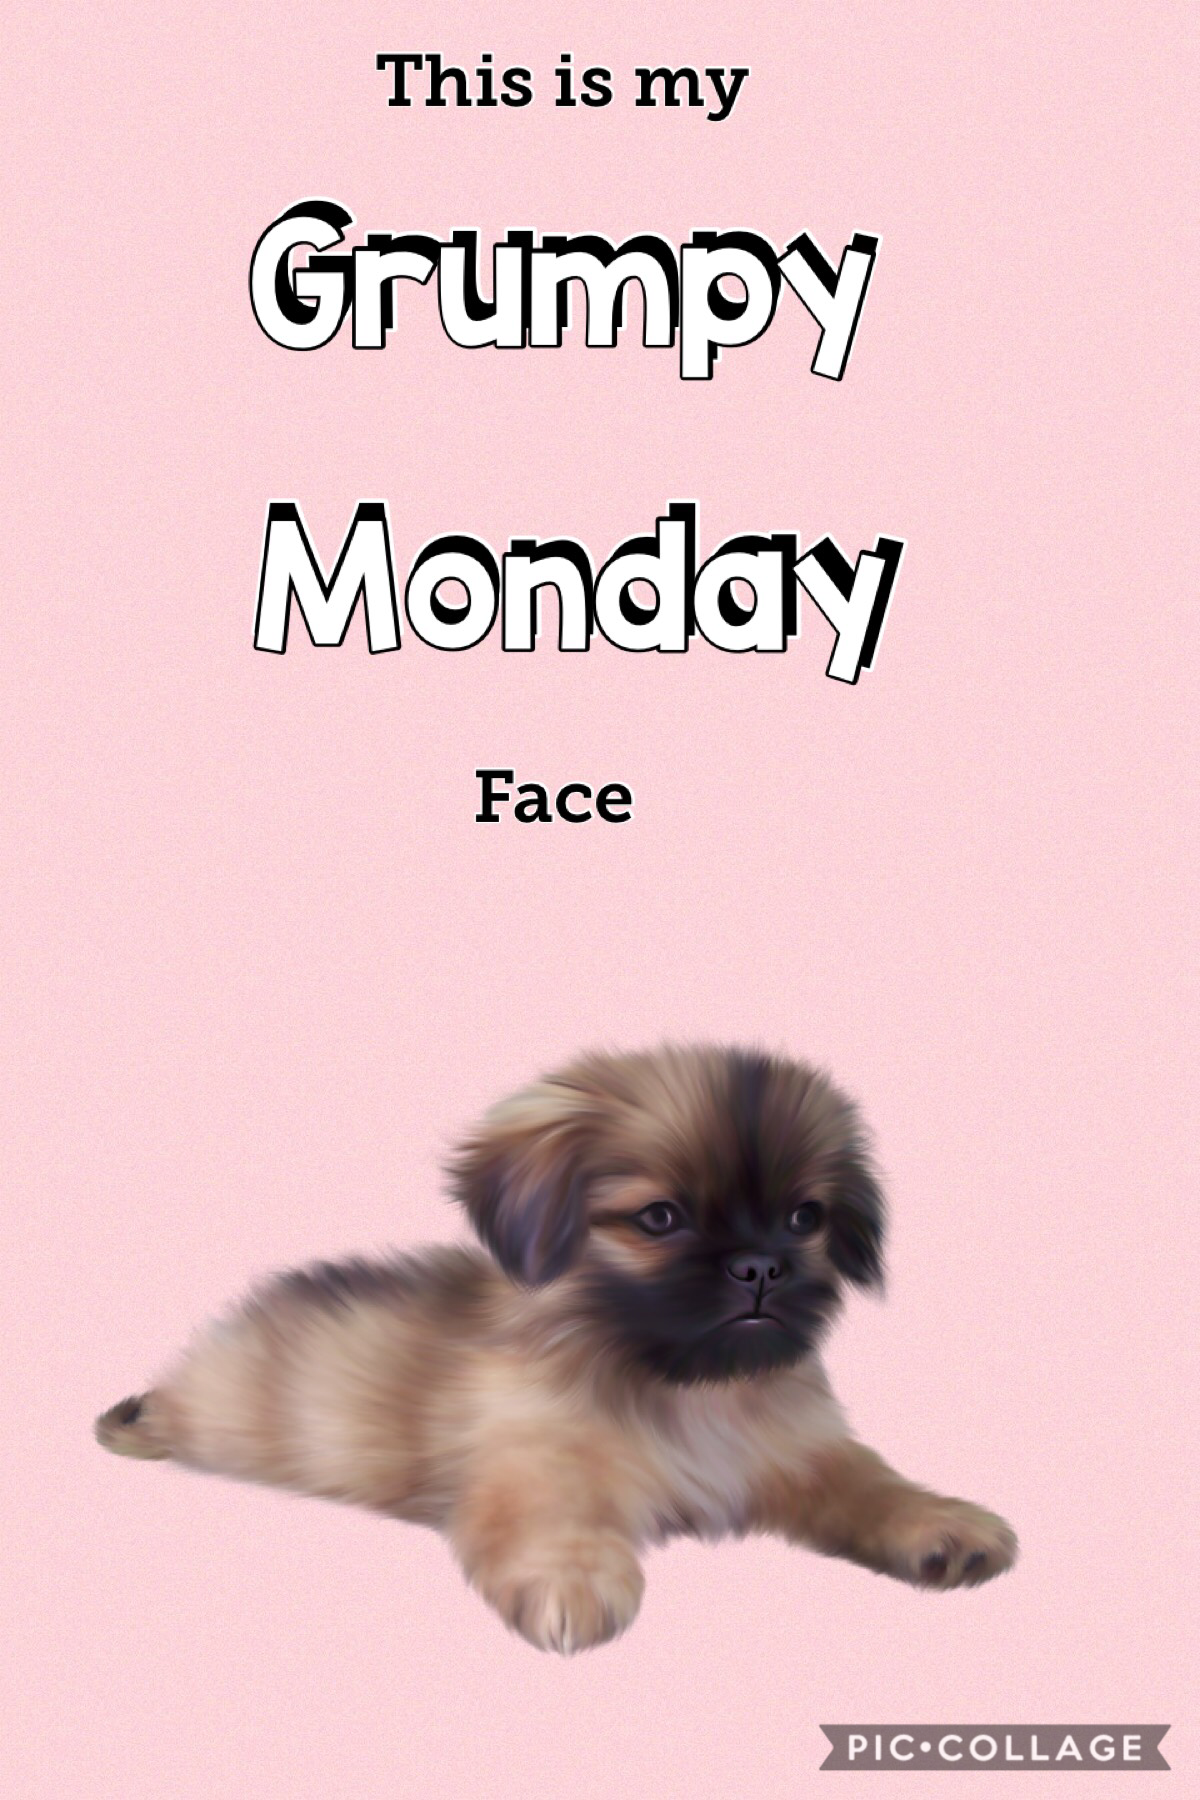 My grumpy Monday face 